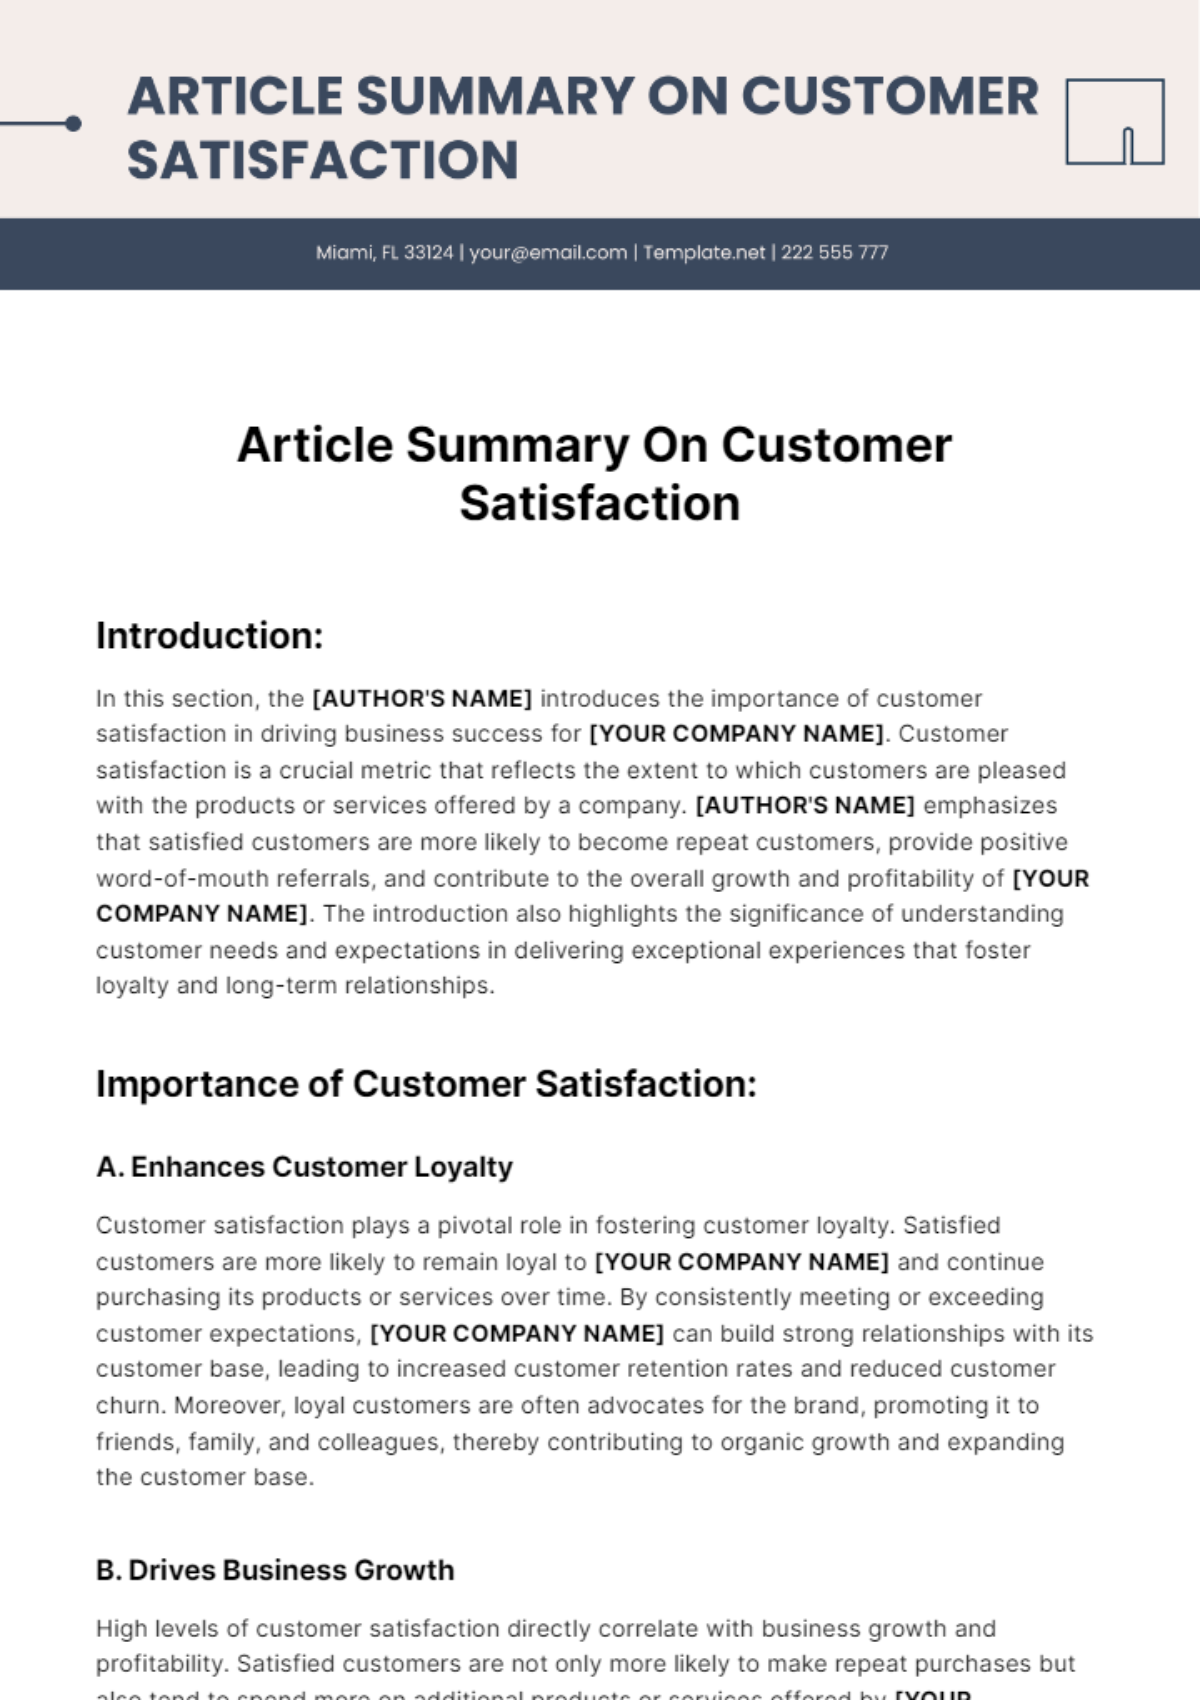 Free Article Summary On Customer Satisfaction Template